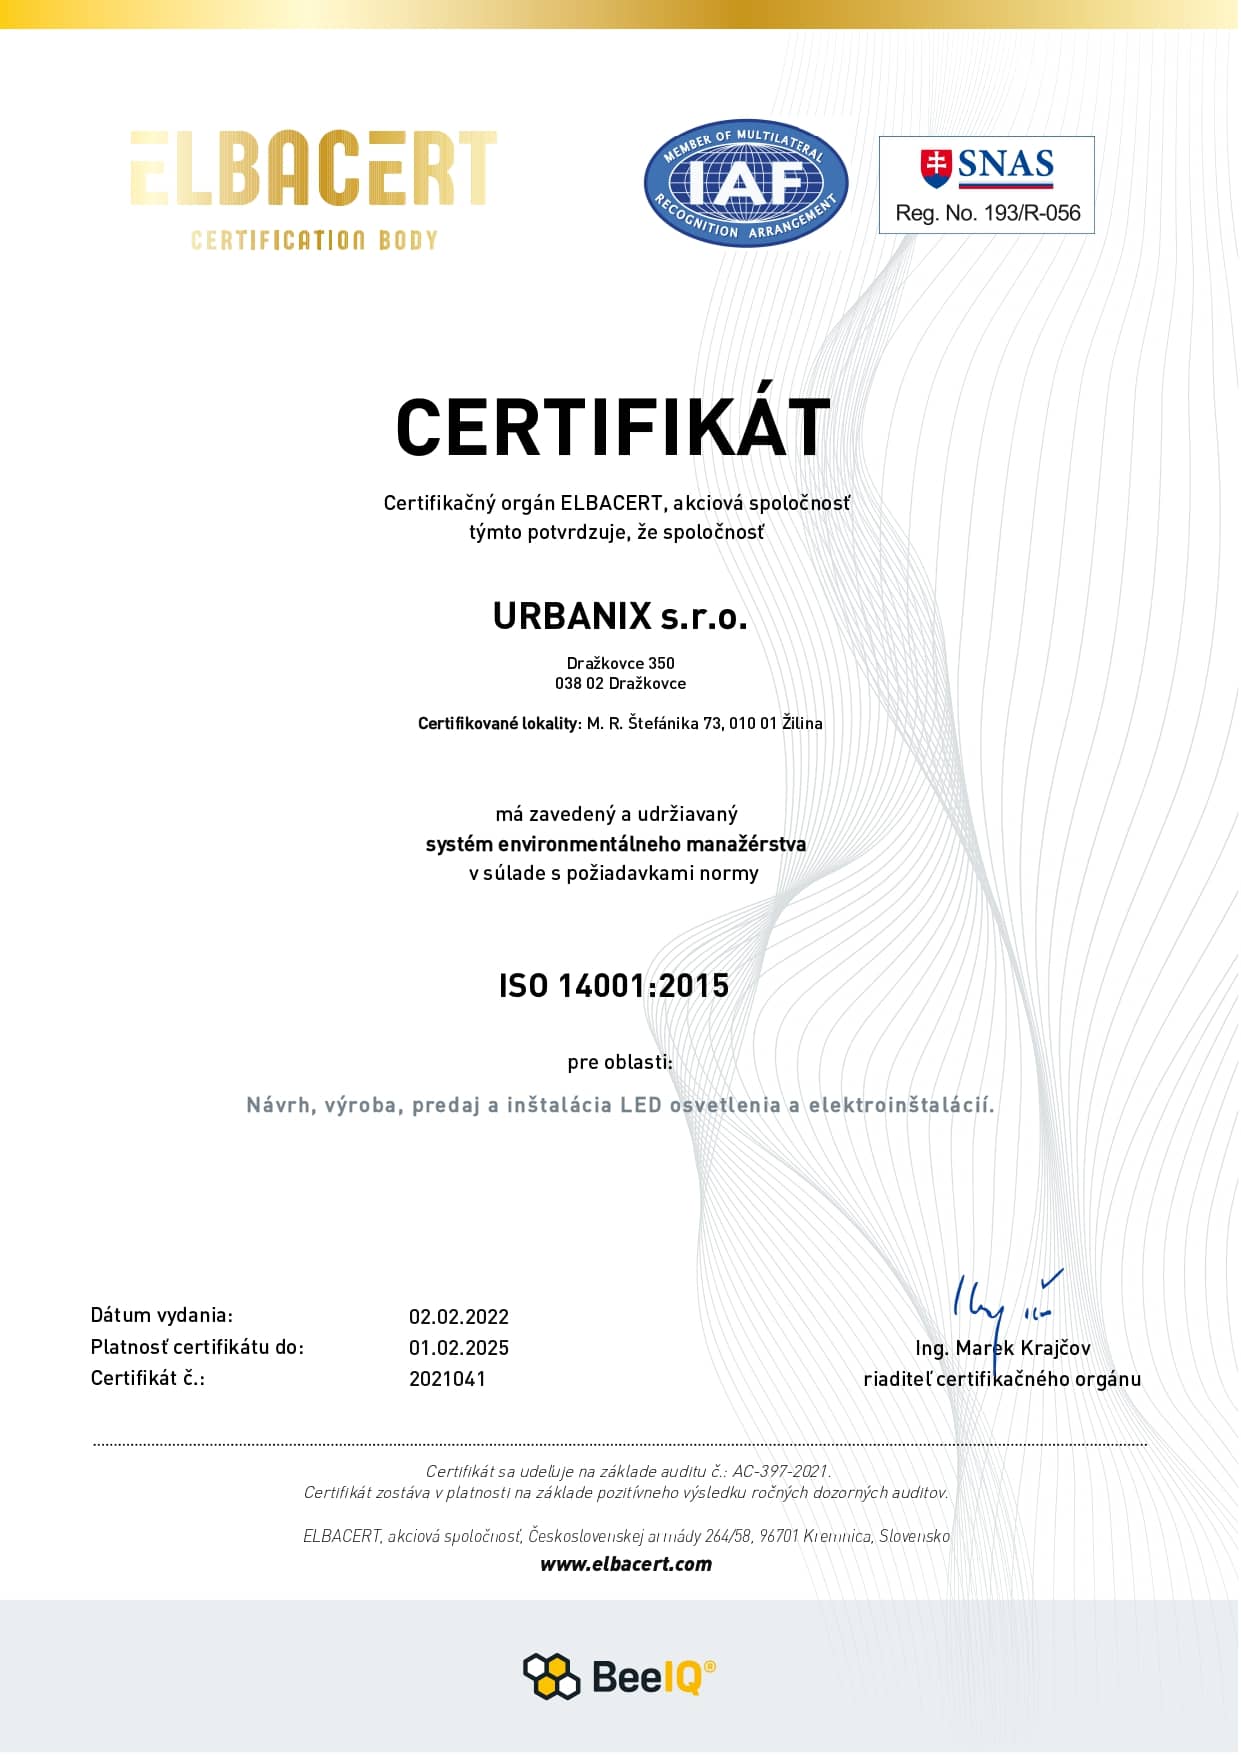 LED priemyslené svietidlá - Elektroinštalácie - Fotovoltika certifikát iso 14001:2015